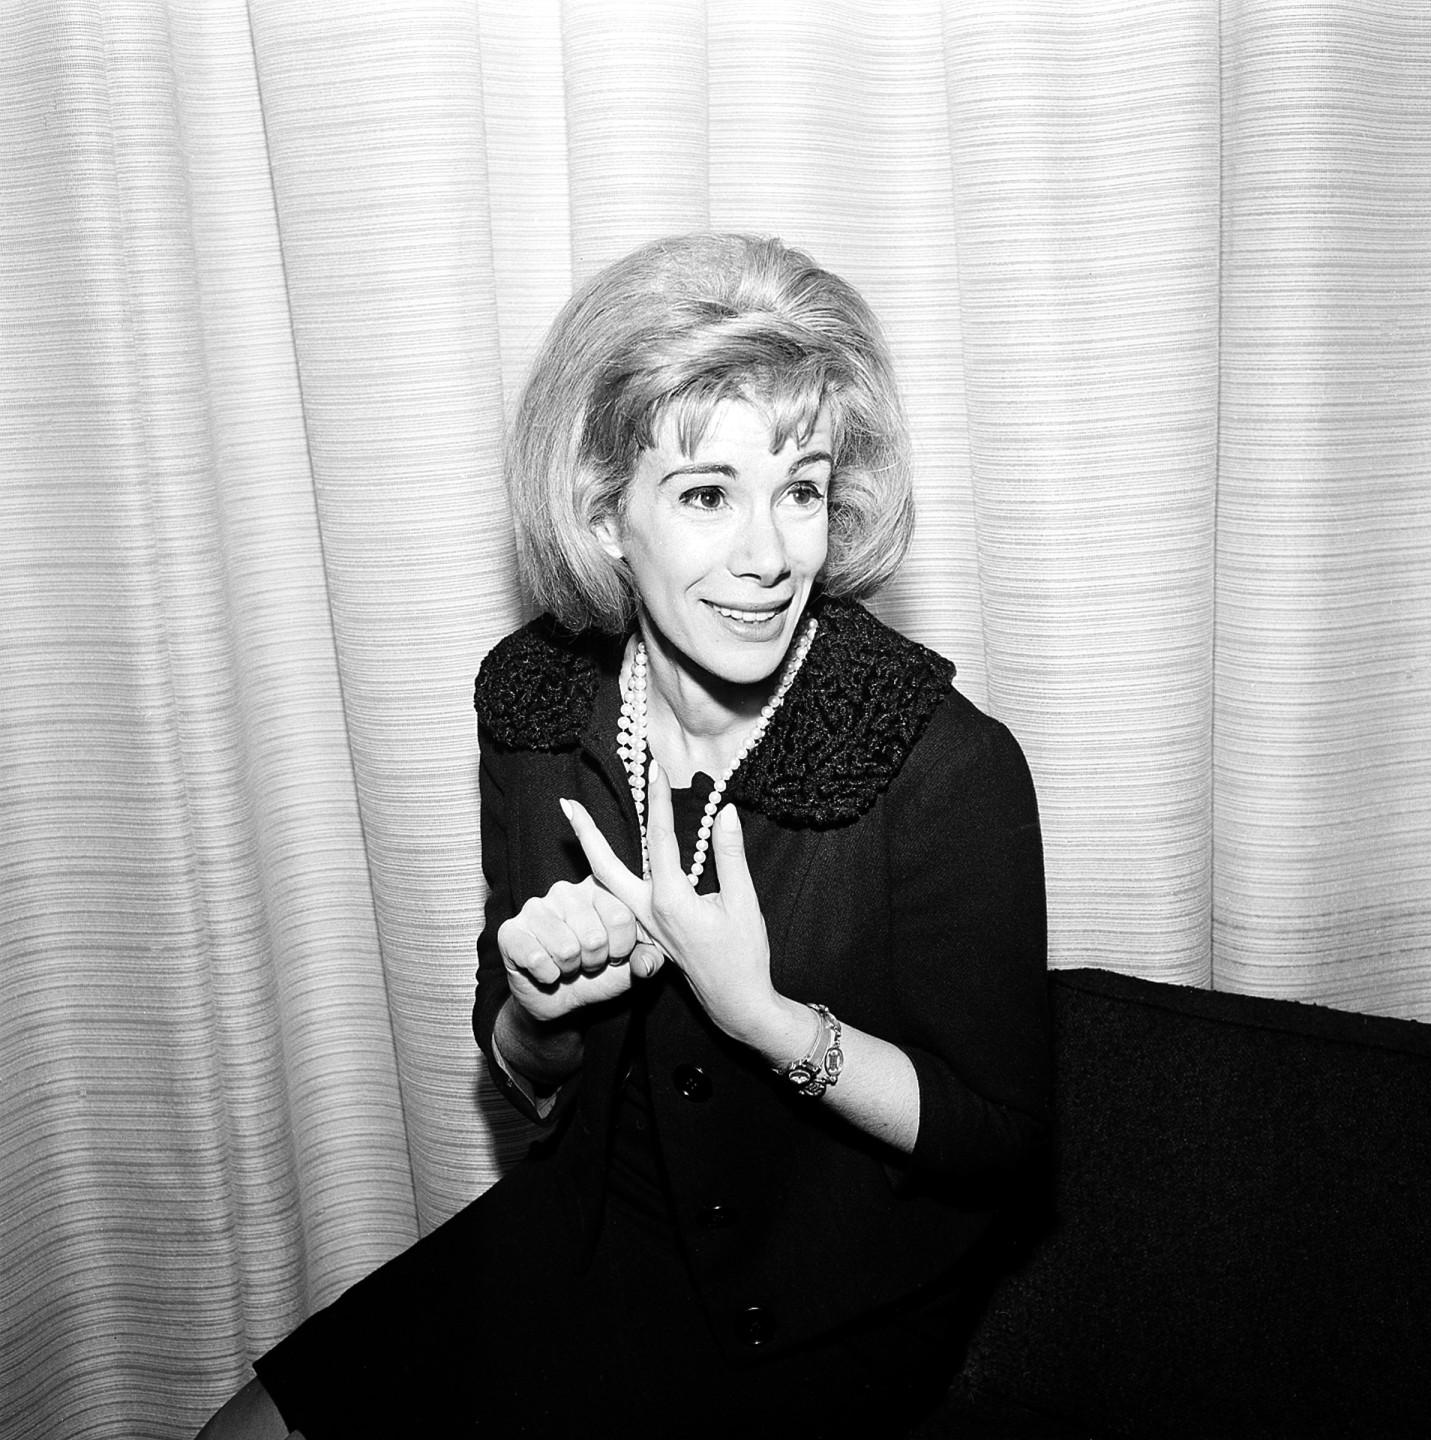 Joan Rivers in 1965. She began appearing on television variety programs like <em>The Ed Sullivan Show</em>.